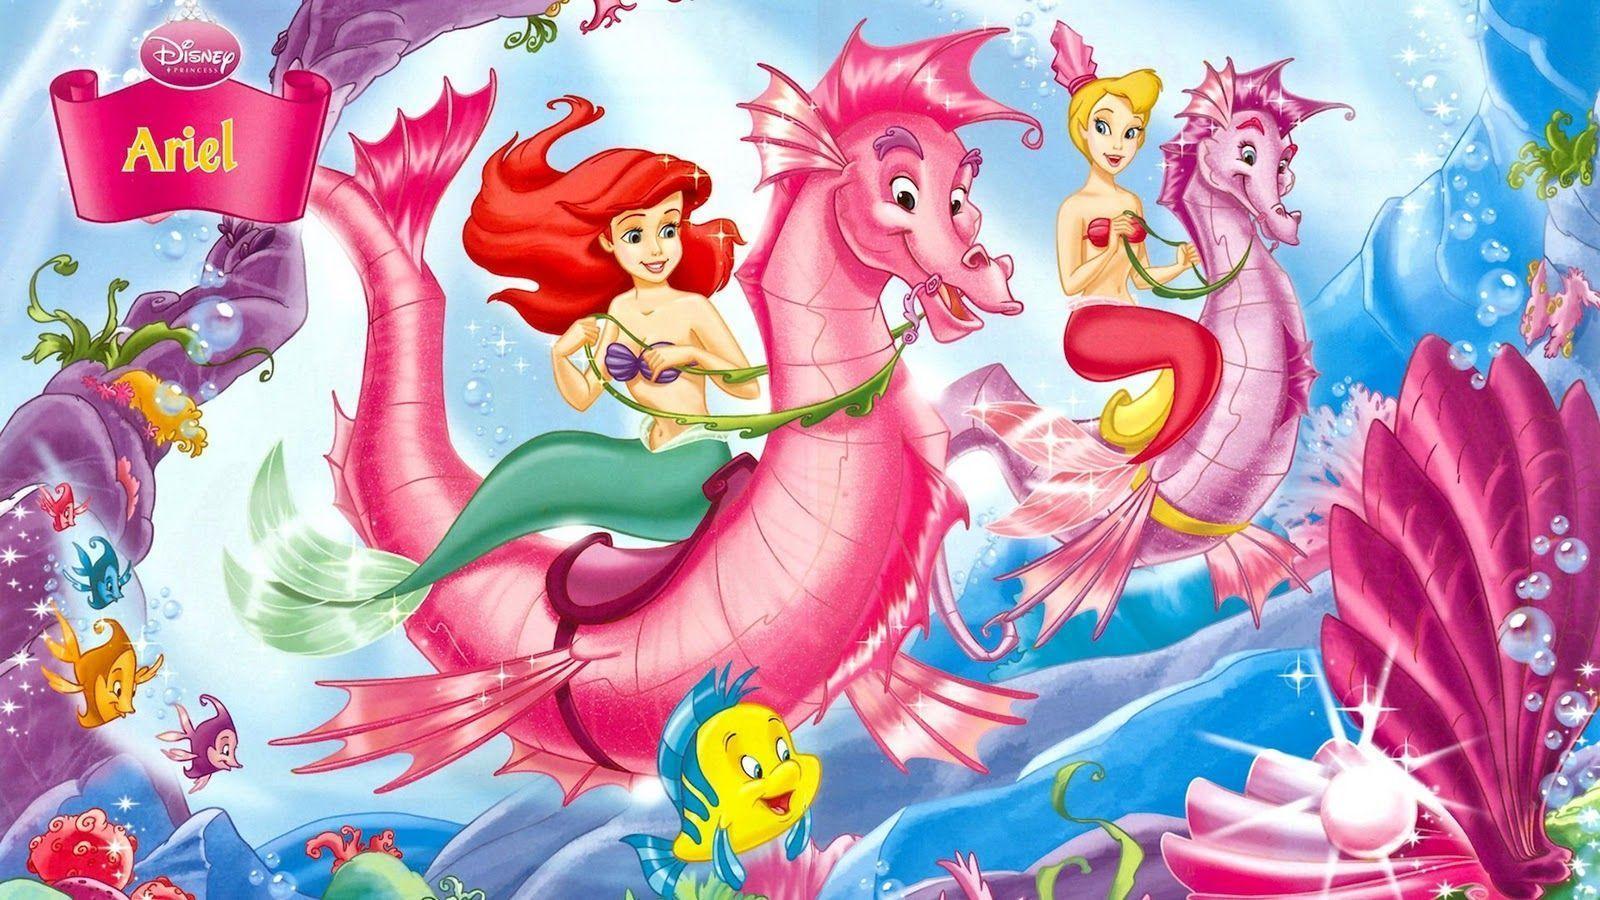 Disney Princess Ariel Wallpaper. coolstyle wallpaper